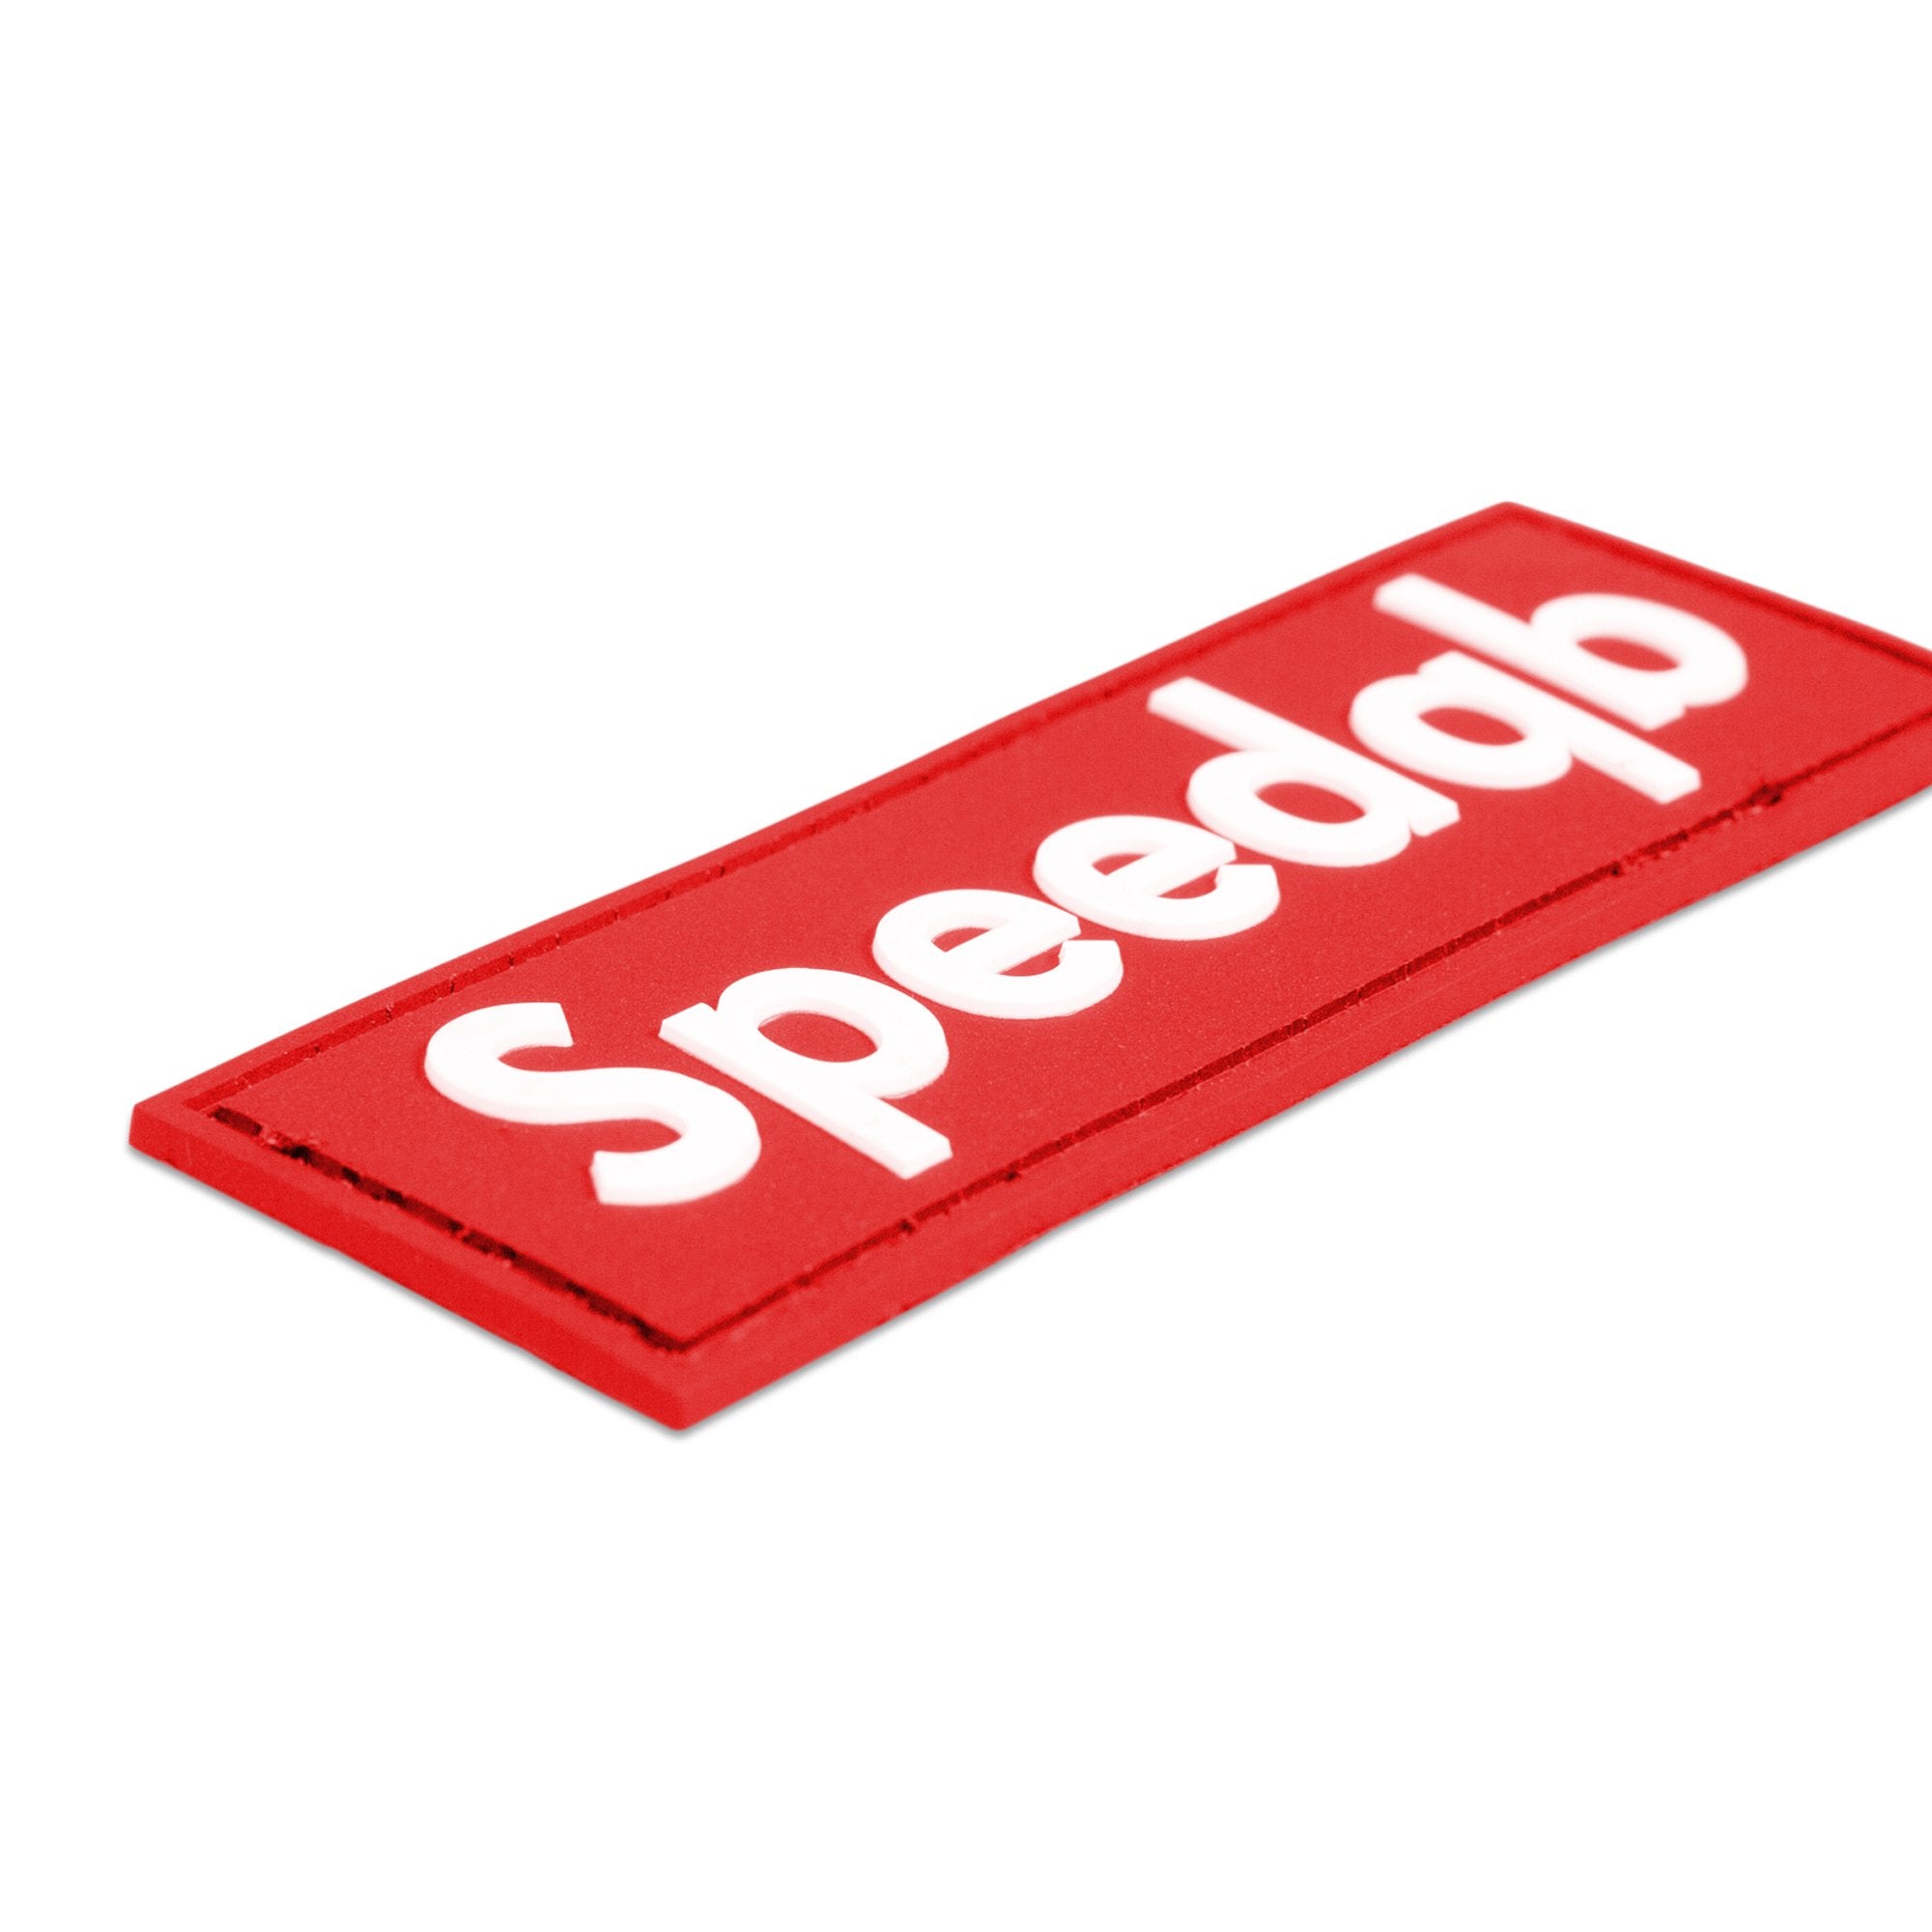 SPEEDQB BOX LOGO PVC PATCH - RED